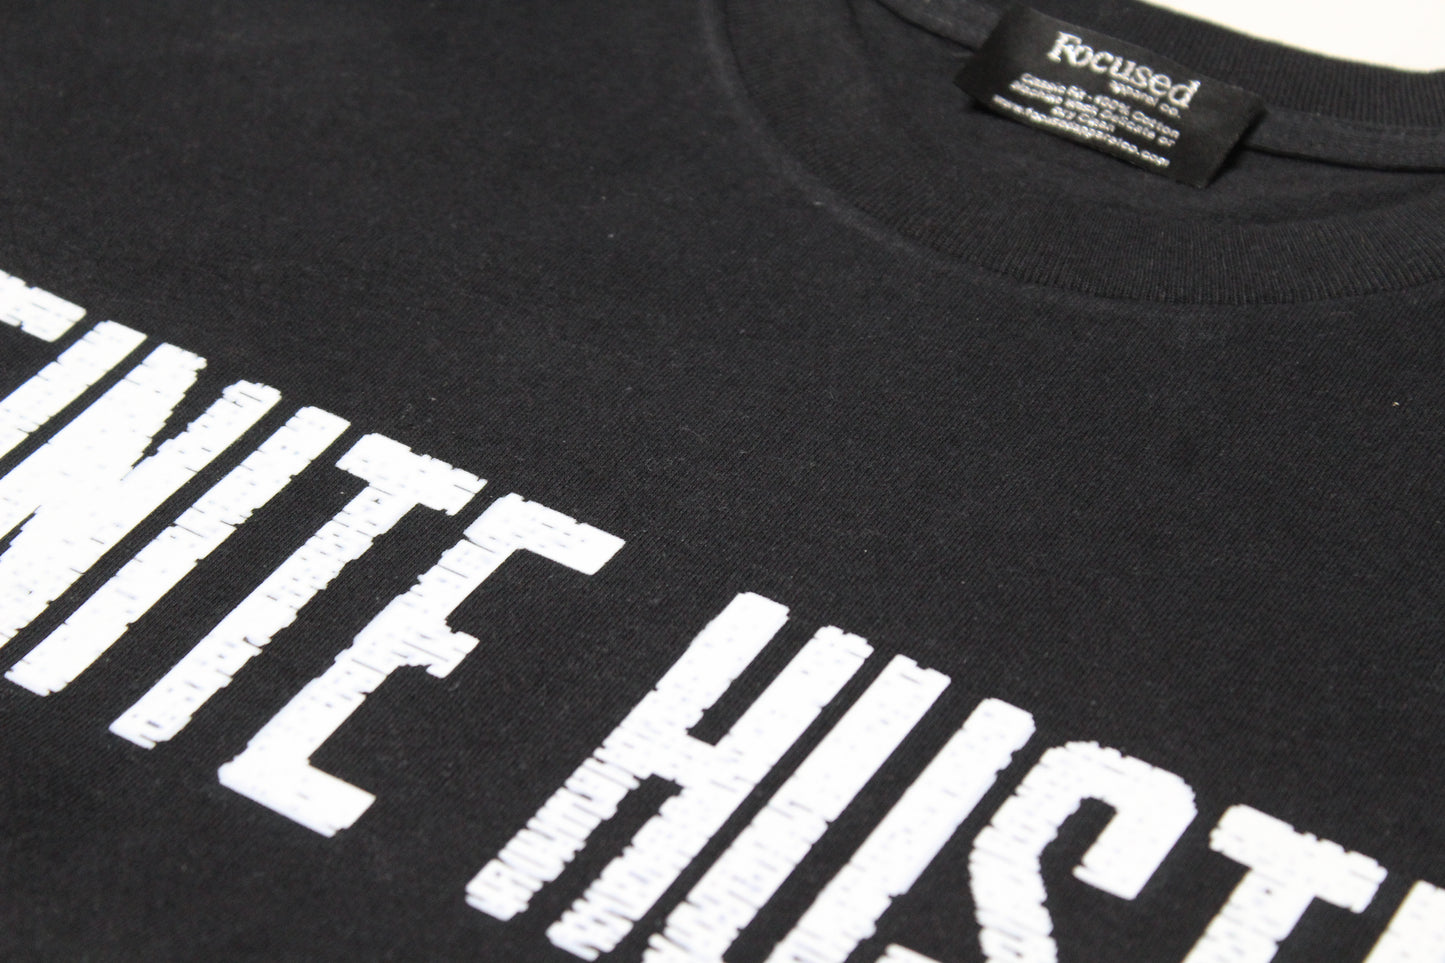 Infinite Hustle T-Shirt